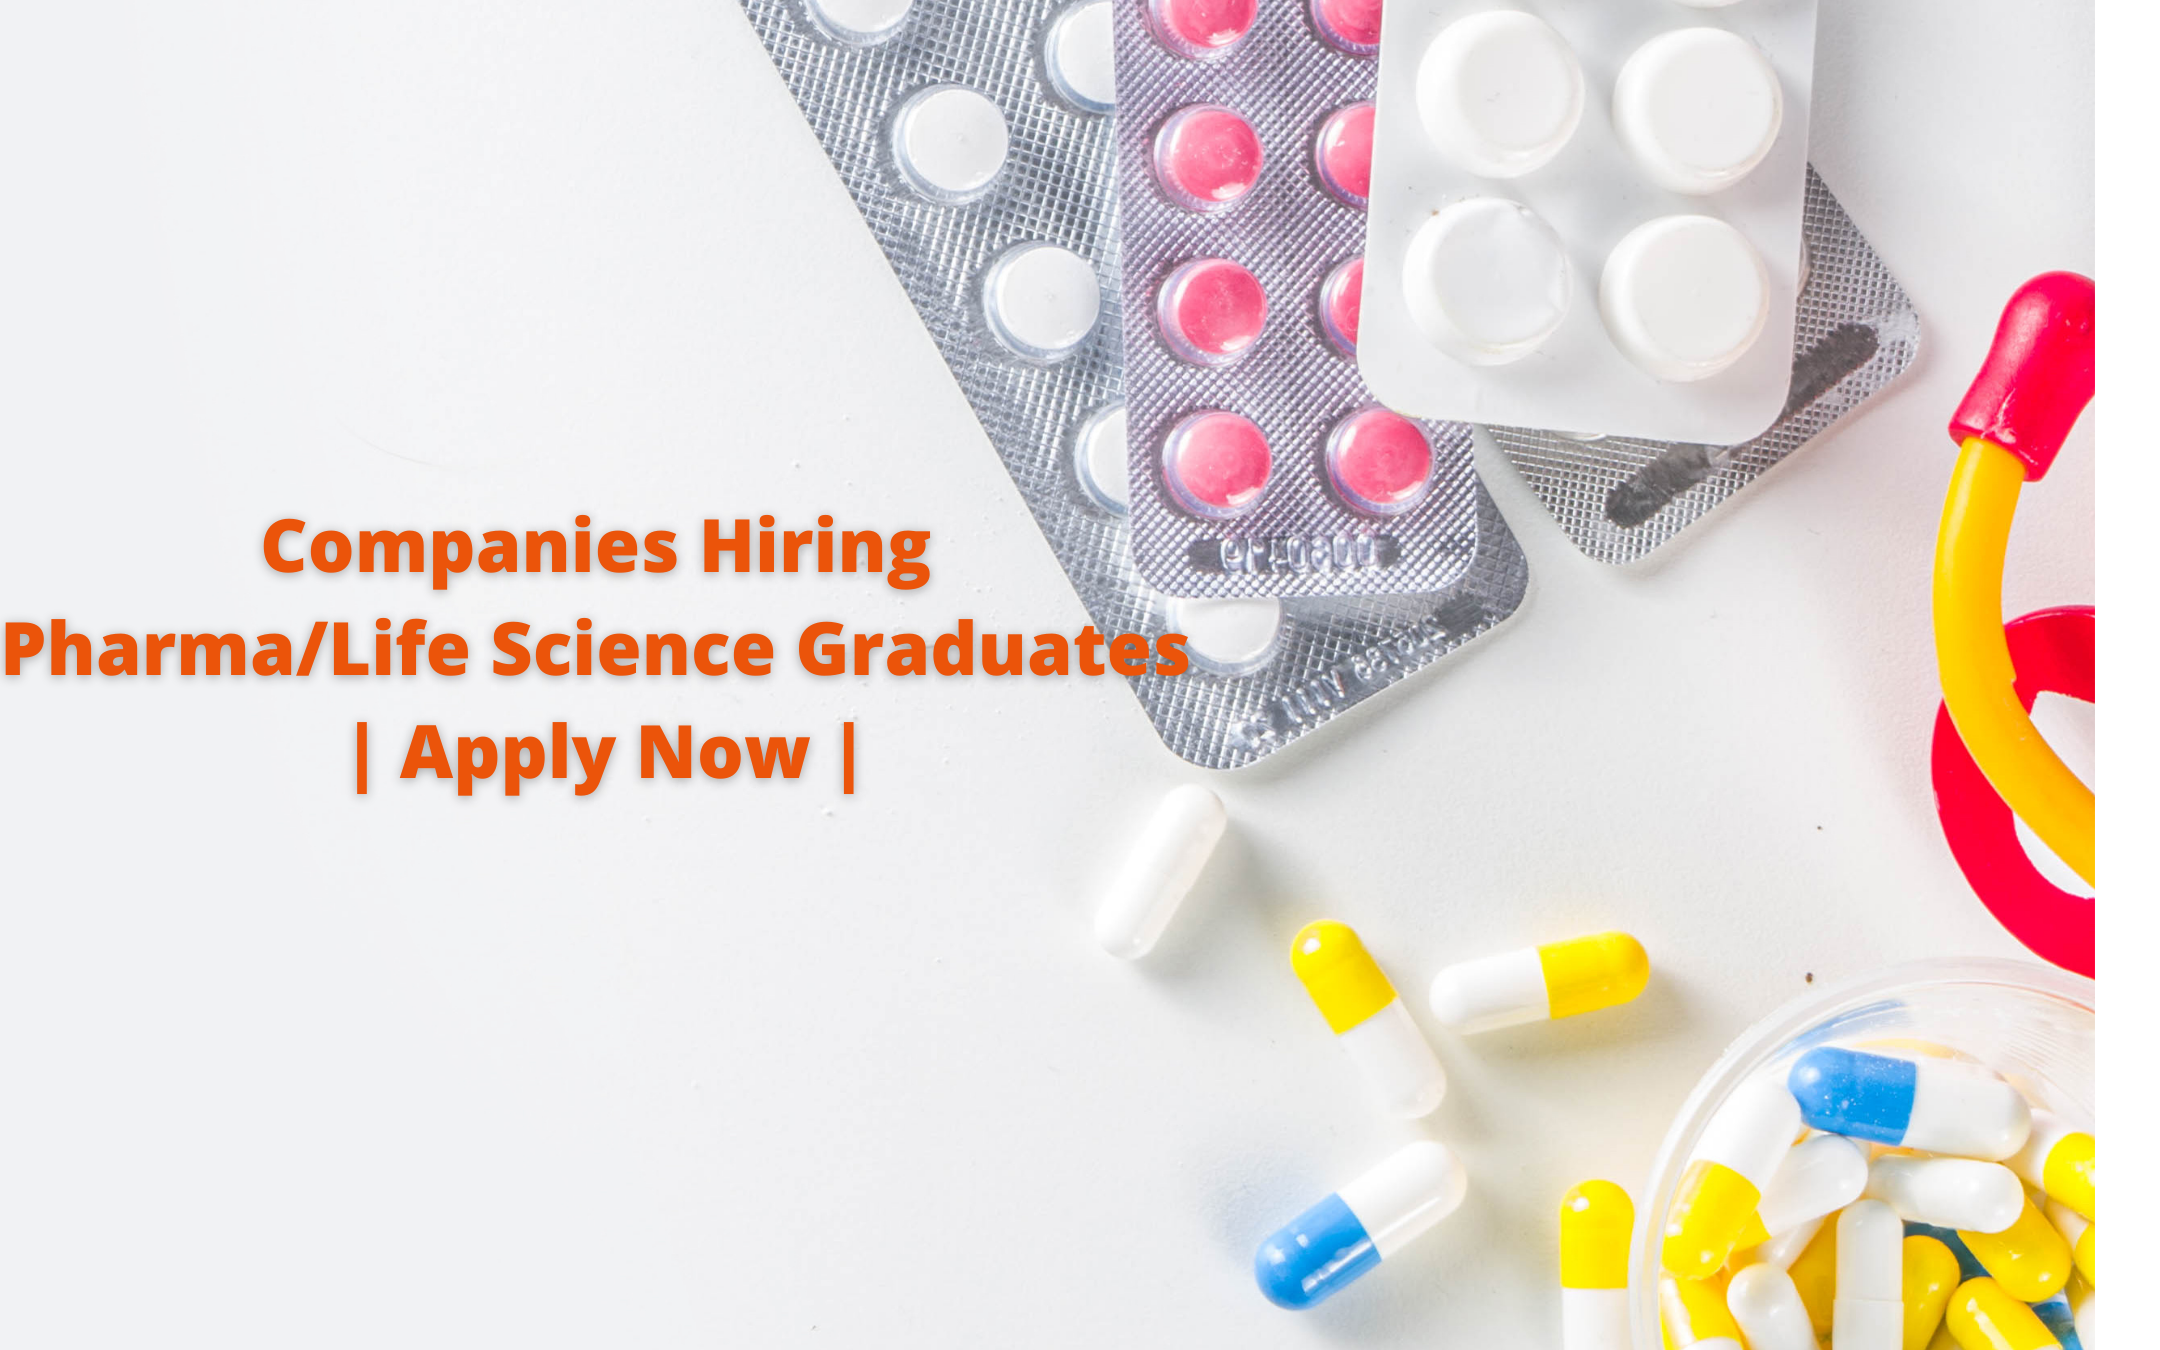 Companies Hiring in Pharma/Life Science Graduates